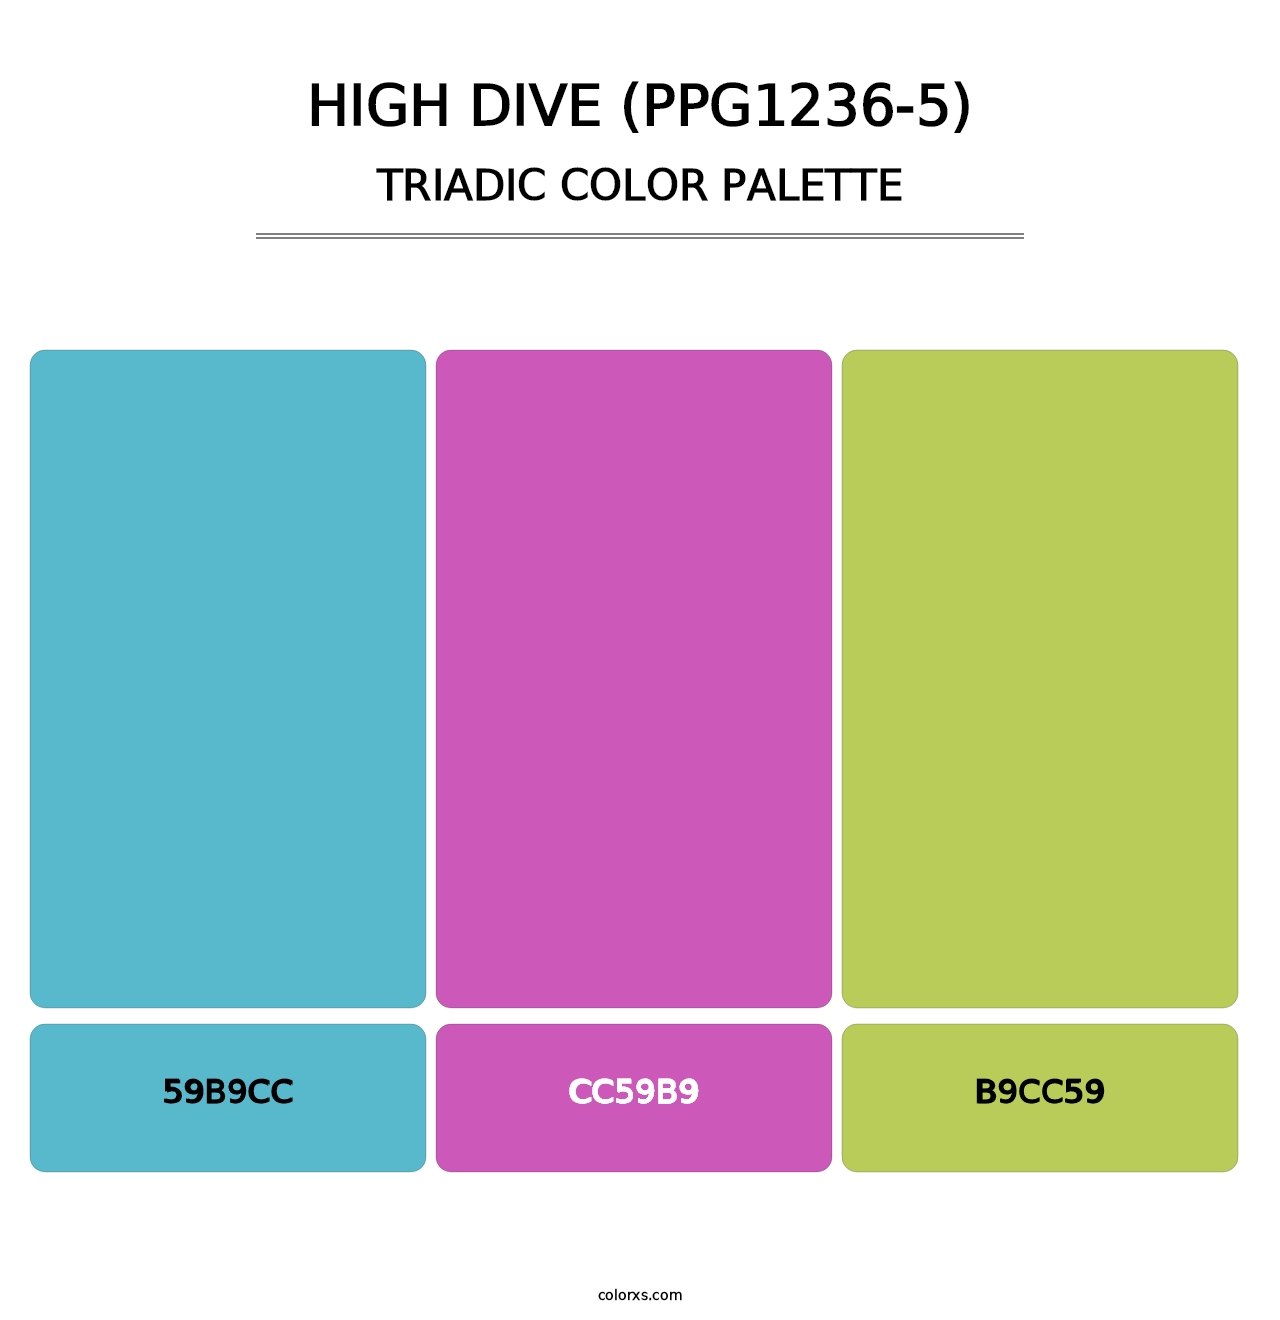 High Dive (PPG1236-5) - Triadic Color Palette